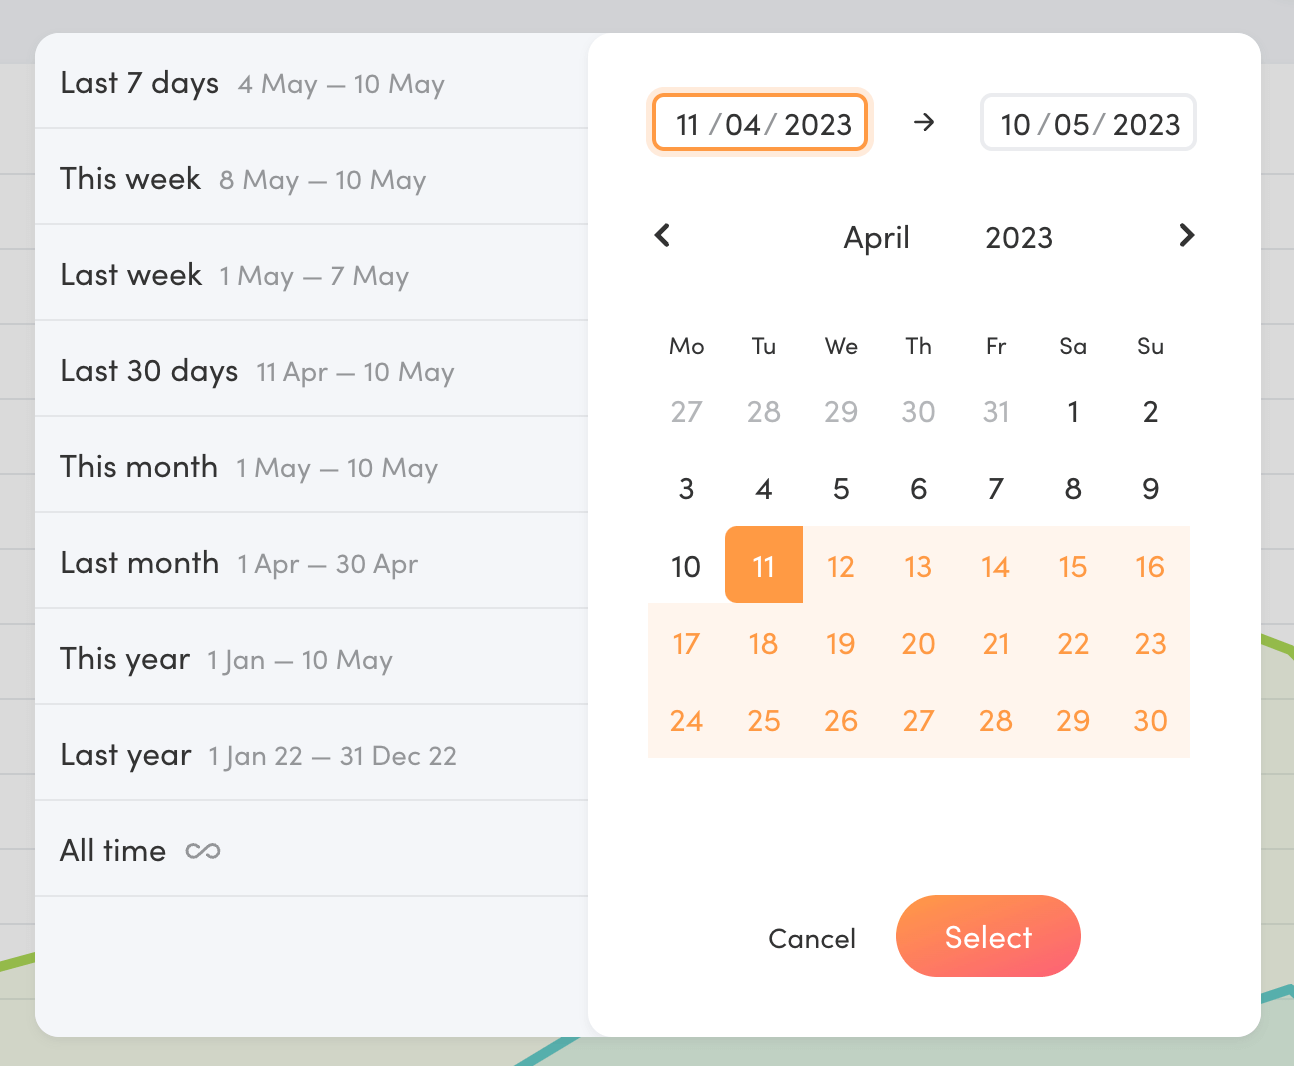 The date range selector